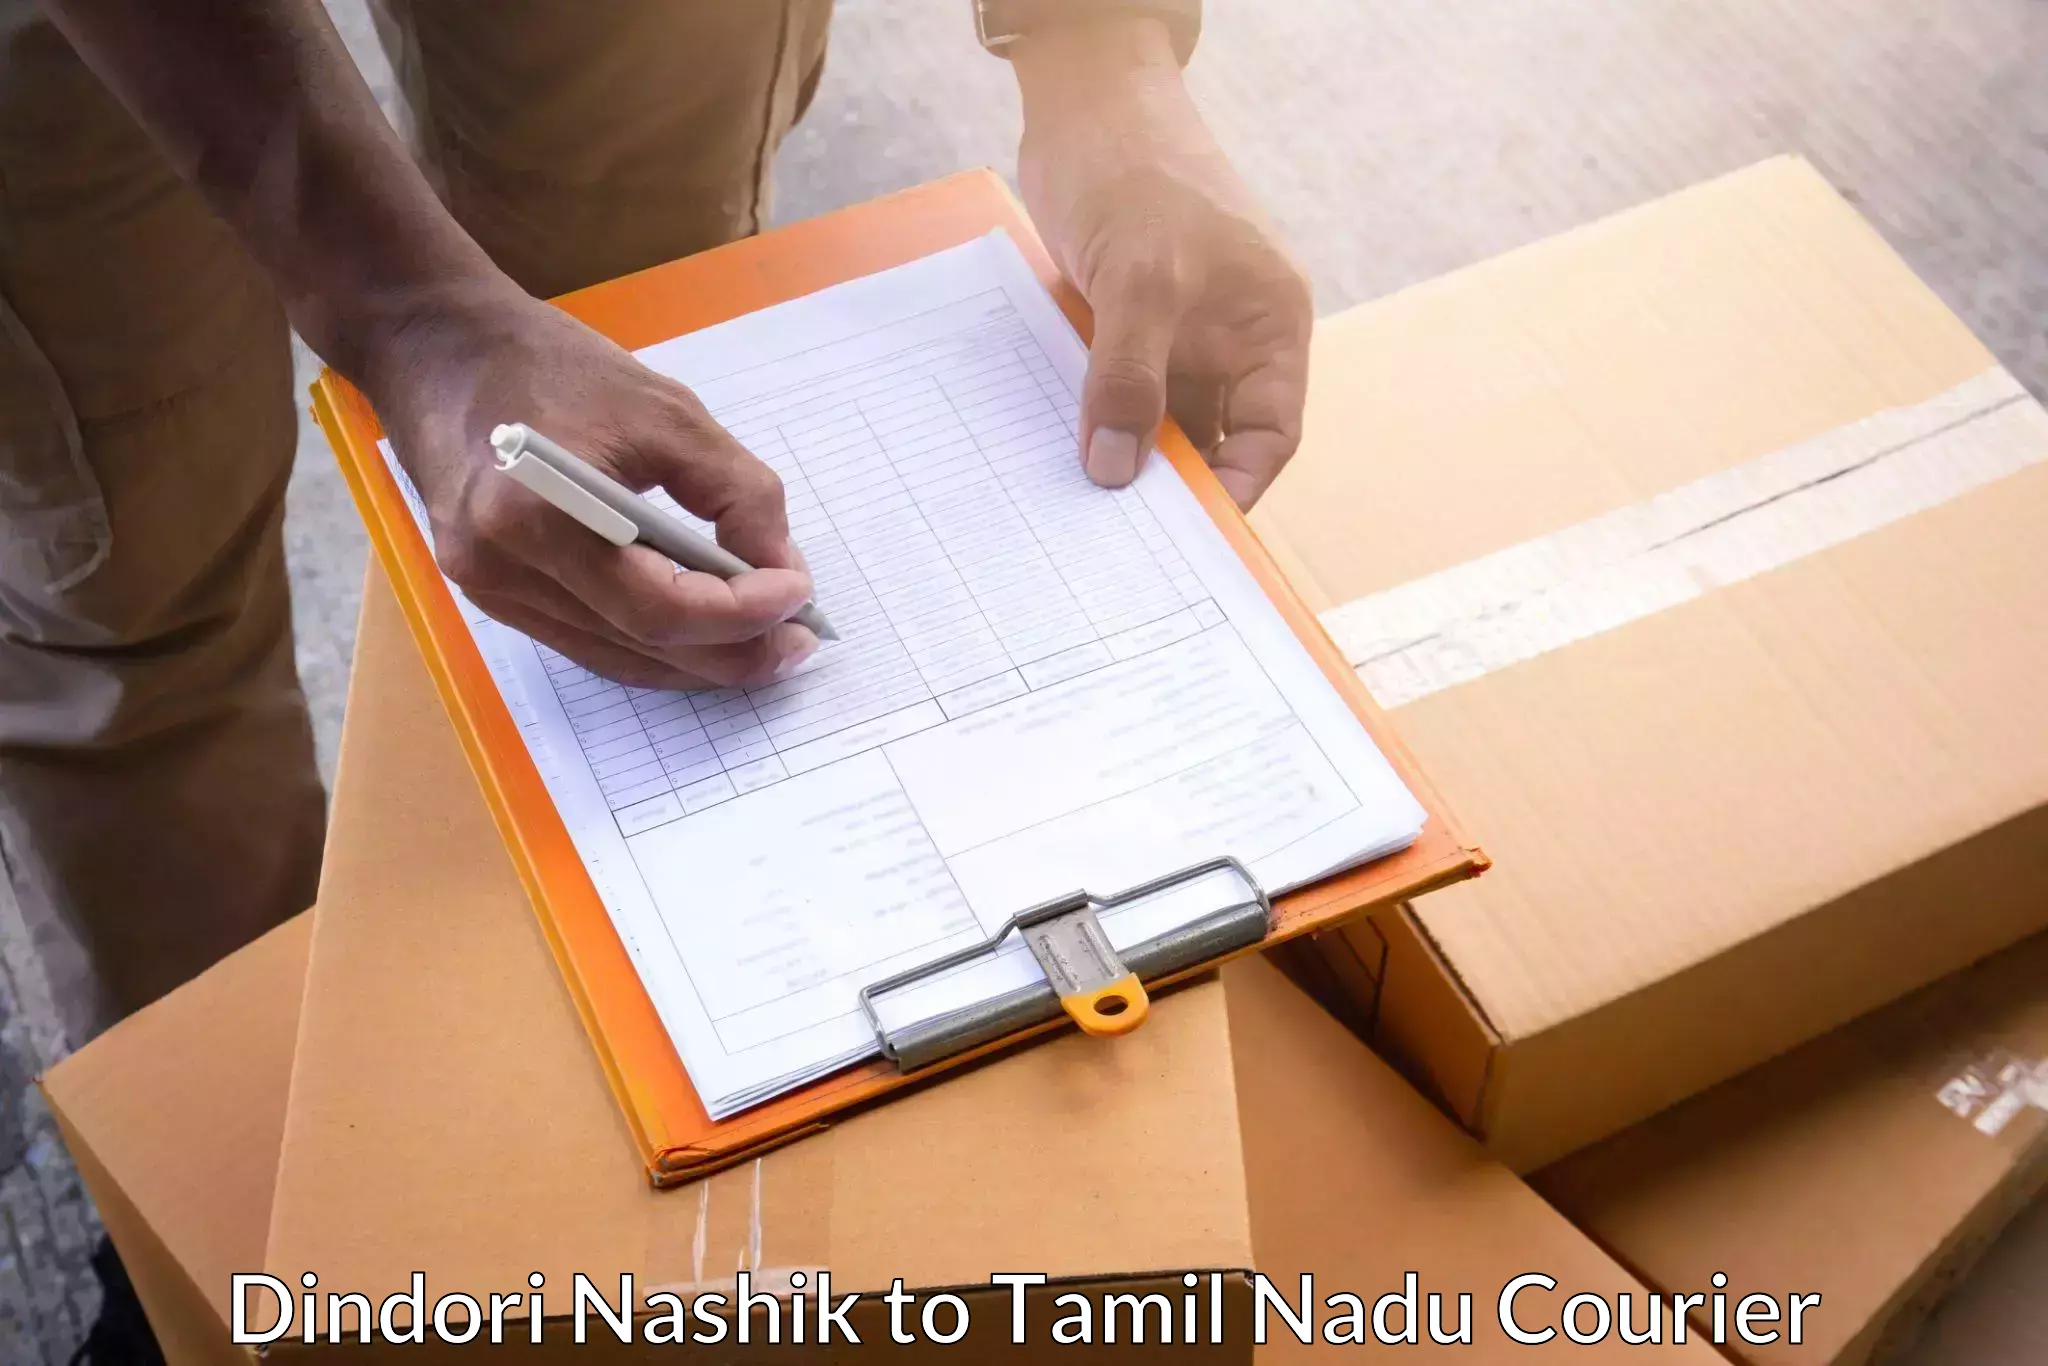 Affordable parcel service Dindori Nashik to Nagapattinam